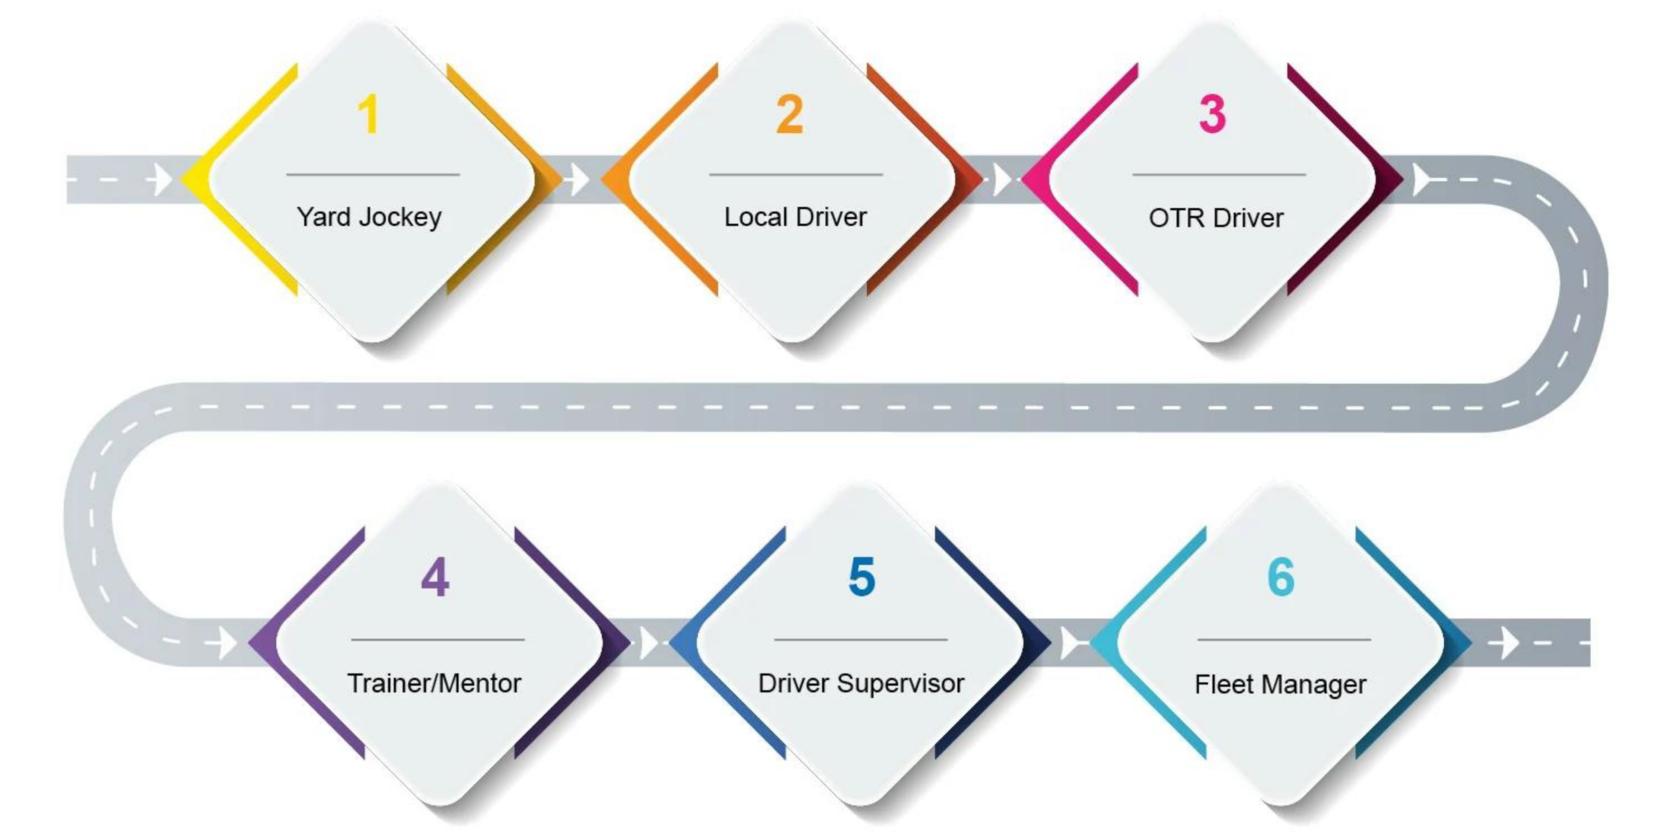 Truck Driver Retention Strategies Professional Development and Career Pathways